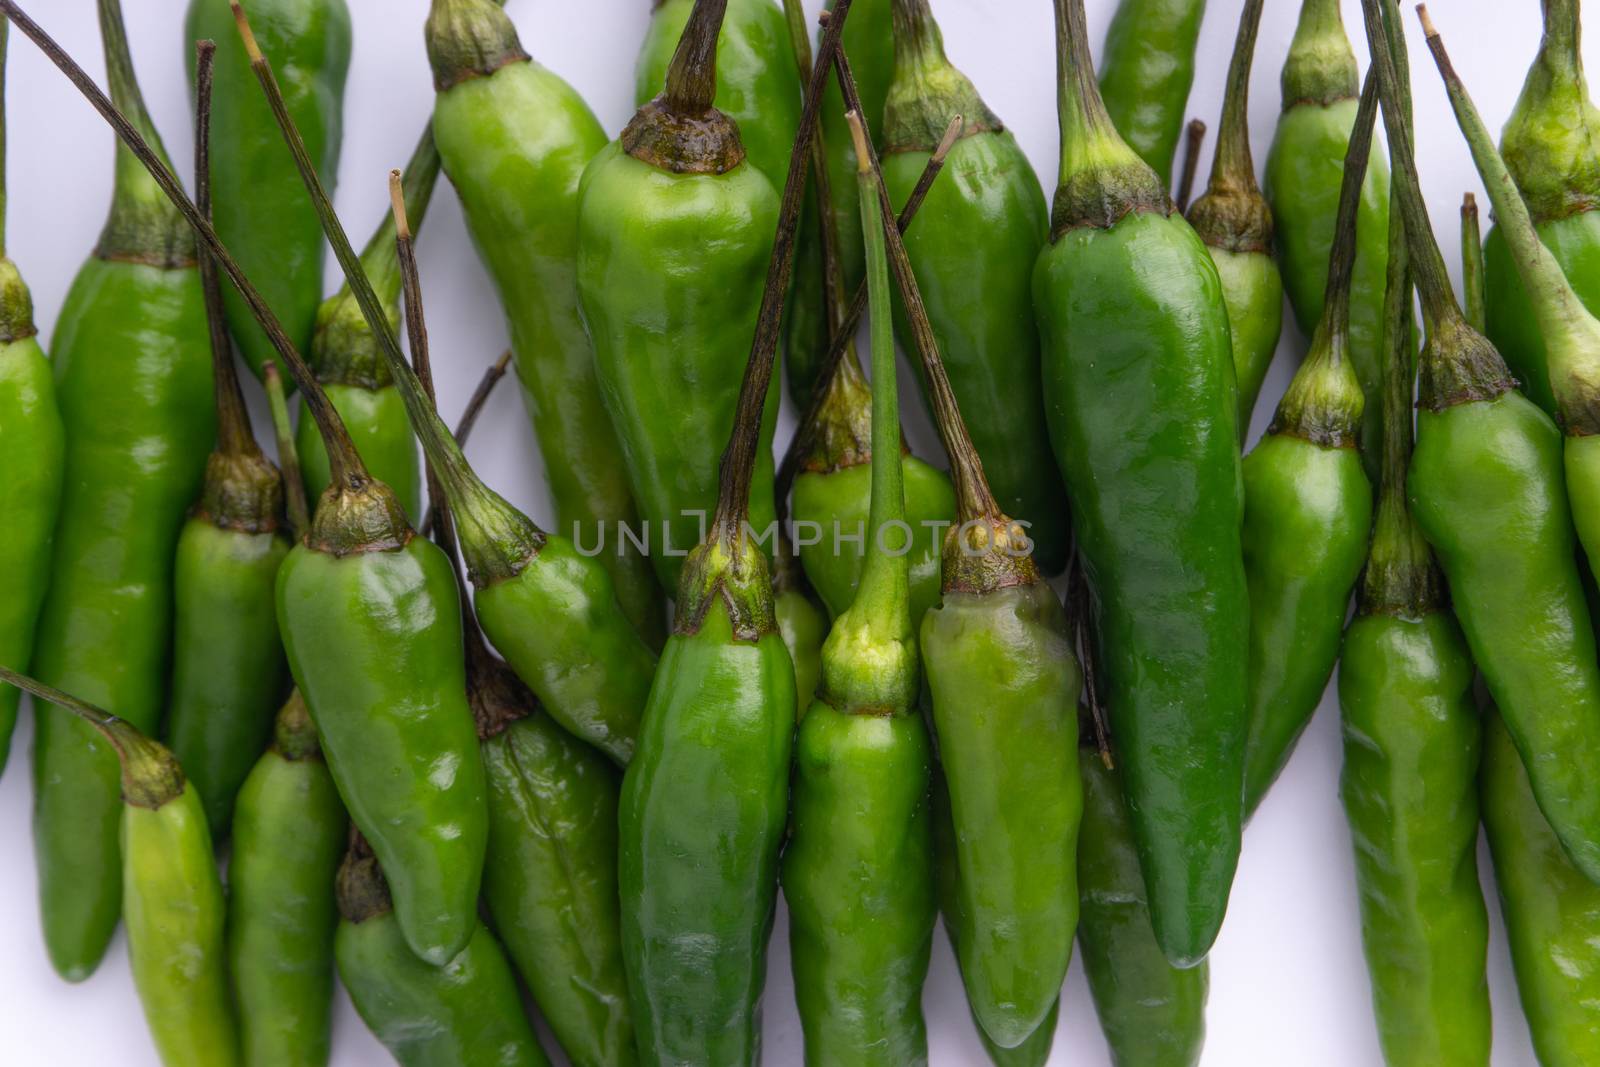 Green BirdÕs eye chili,Thai Chili pepper ,bird chili pepper nature isolate on white background by silverwings